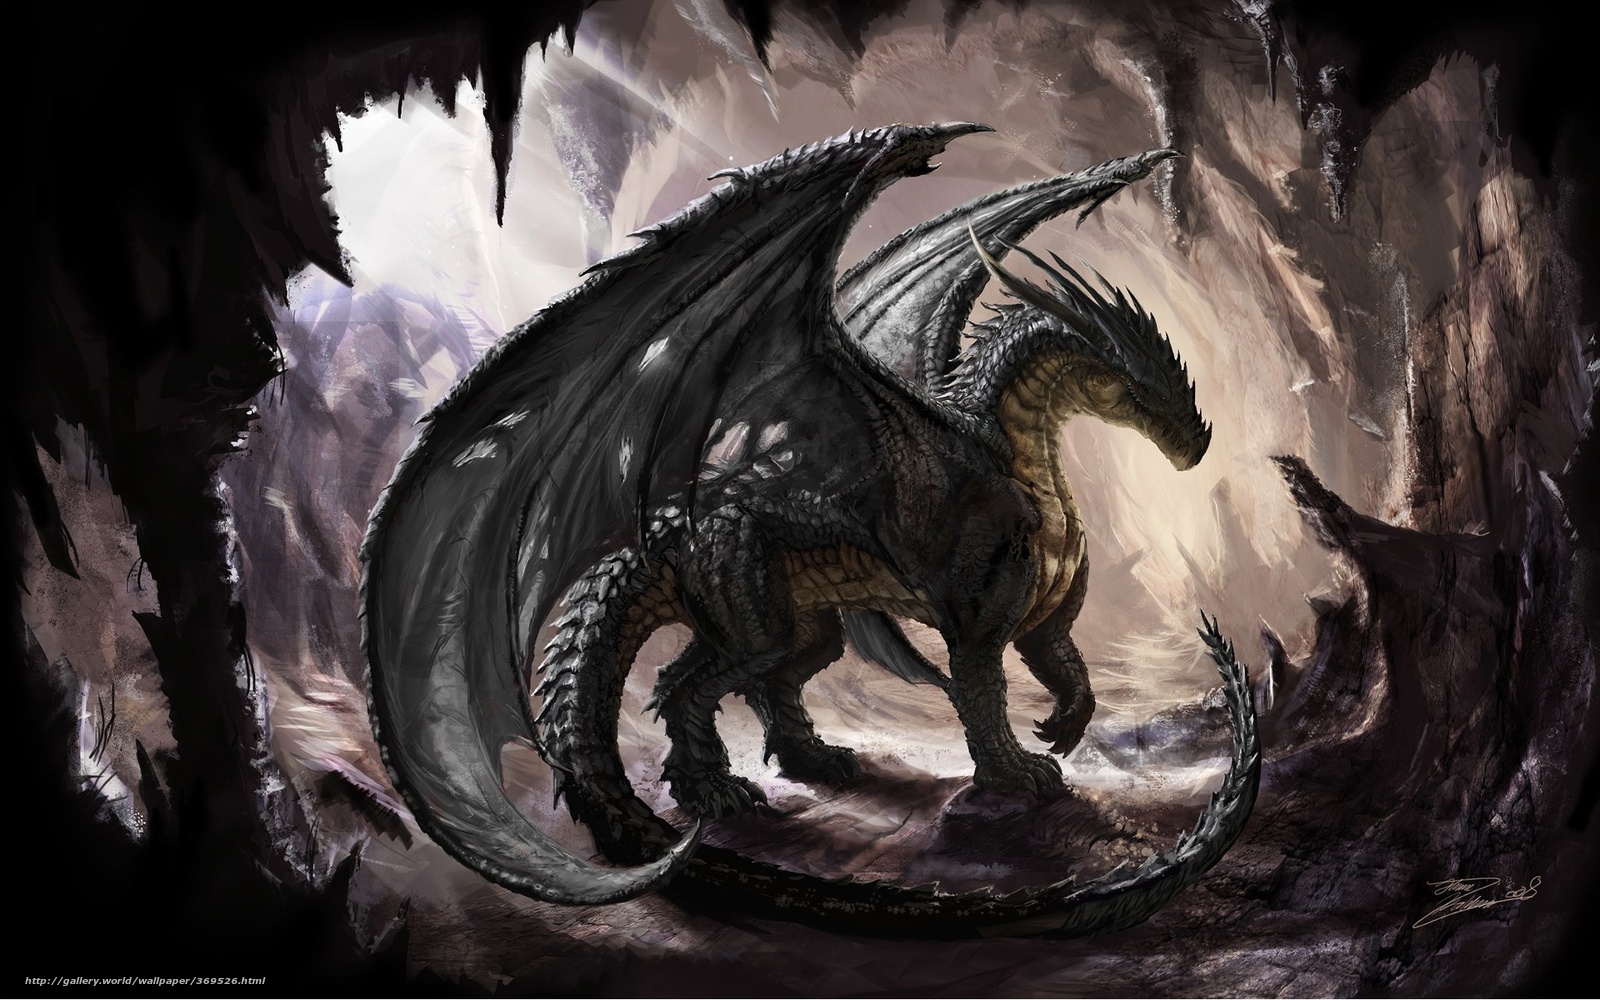 Wallpaper Dragon Caves Art Desktop In The